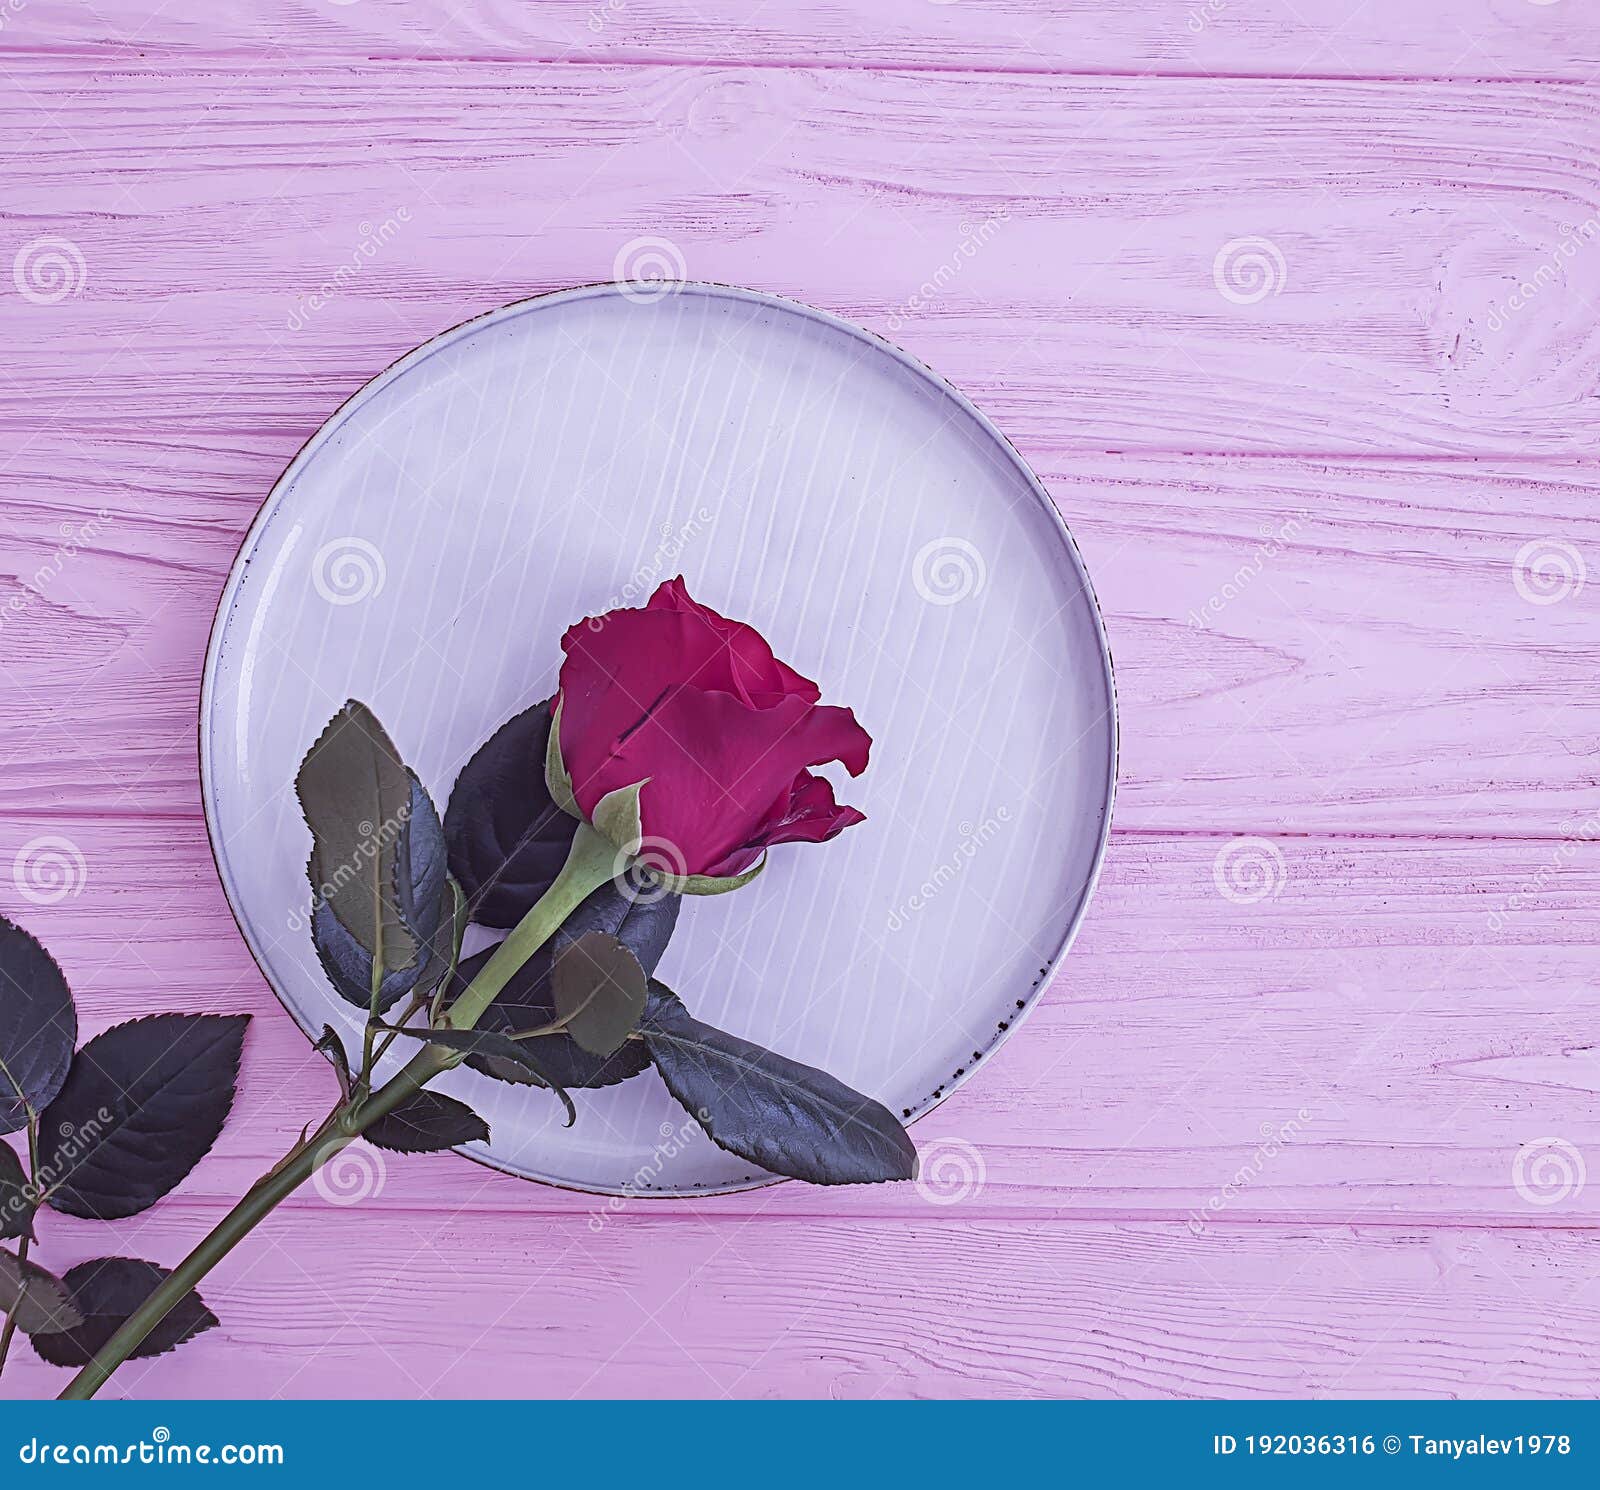 plate flower rose  wooden backgroundn rustic